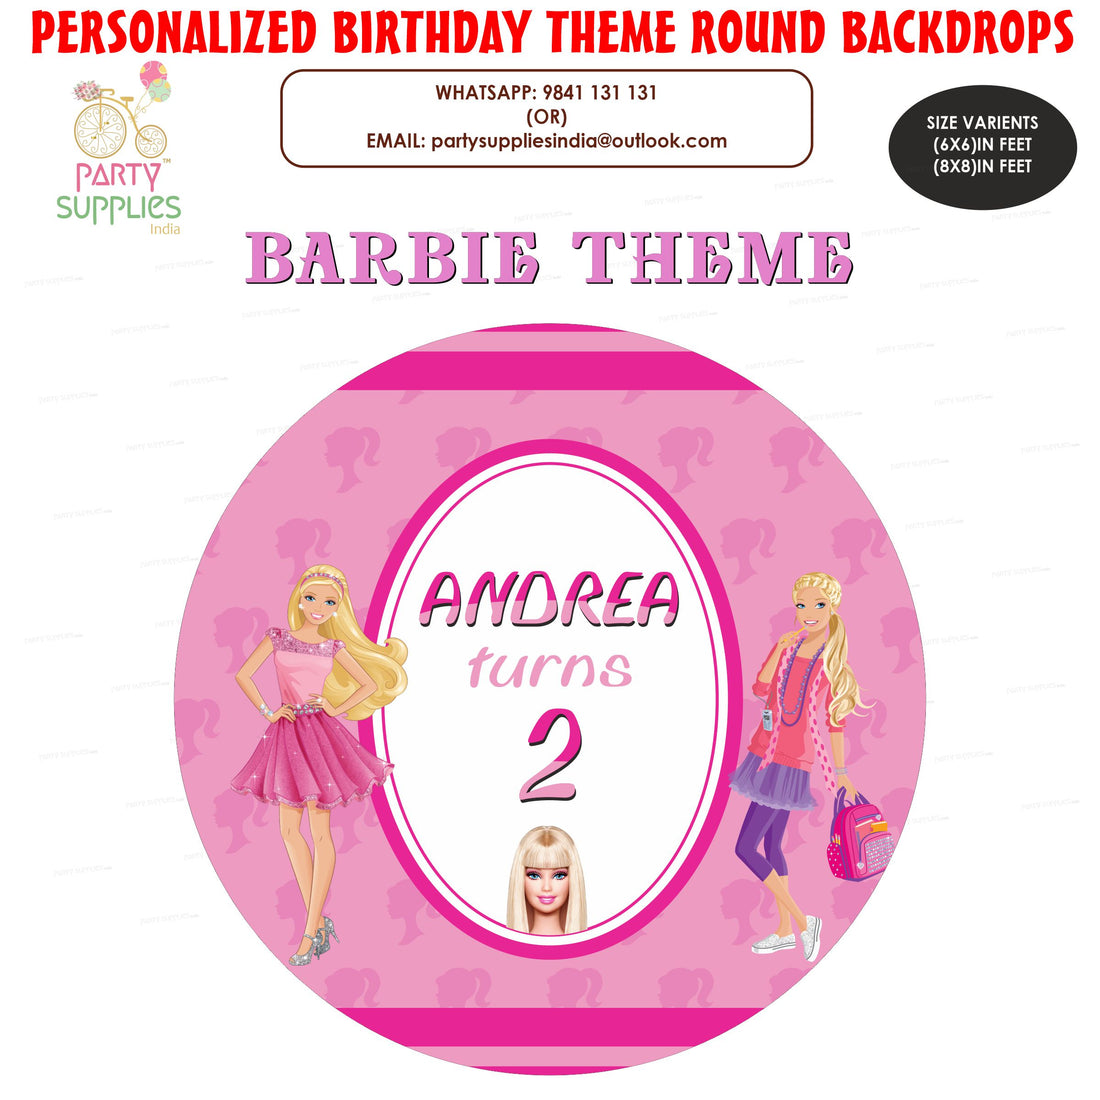 PSI Barbie Theme Round Personalized Backdrop